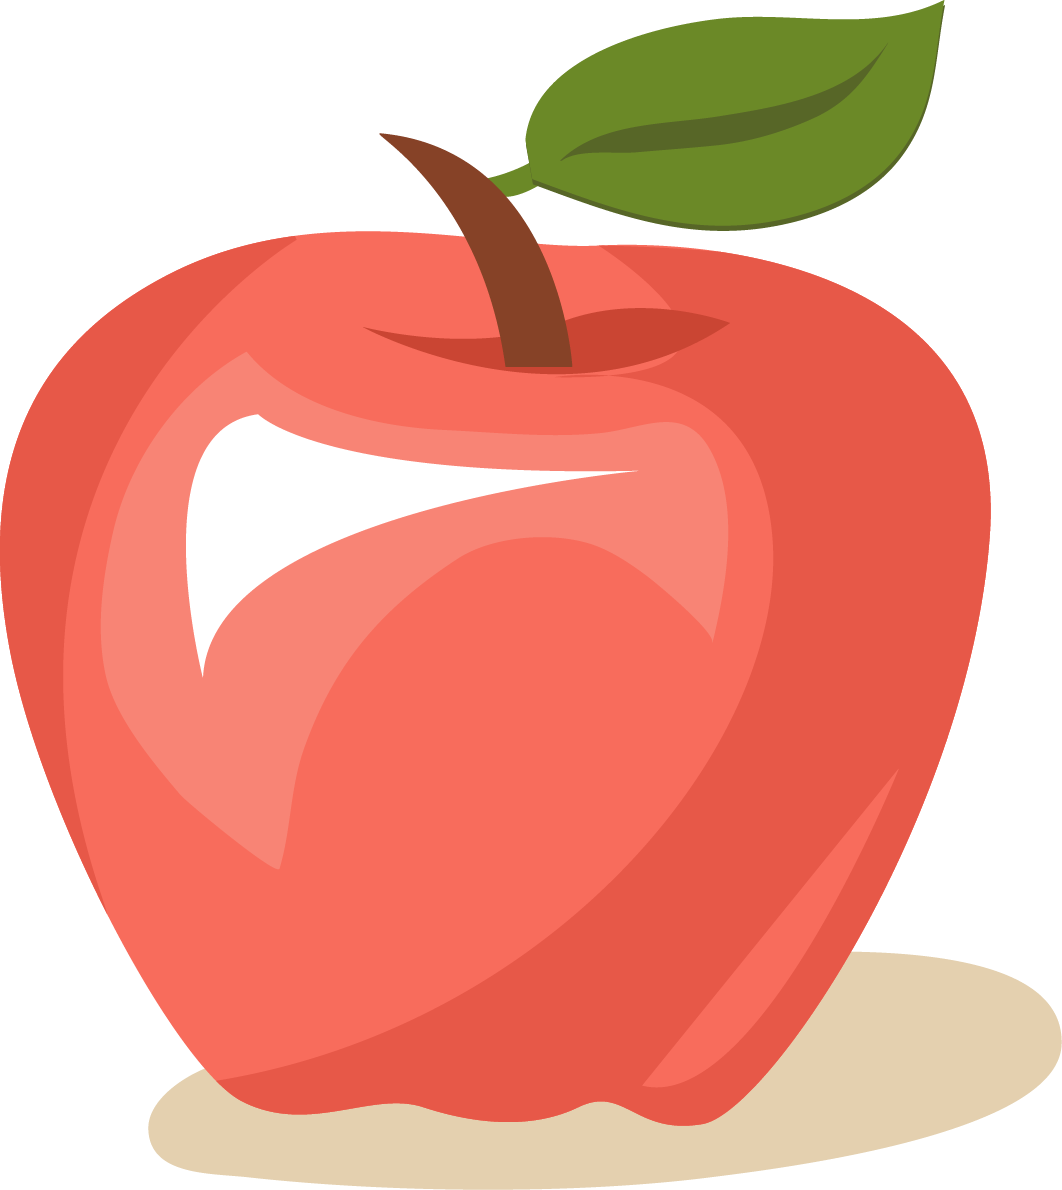 Apple Fruit Drawing - Apple Fruit Cartoon Drawing (1062x1190)